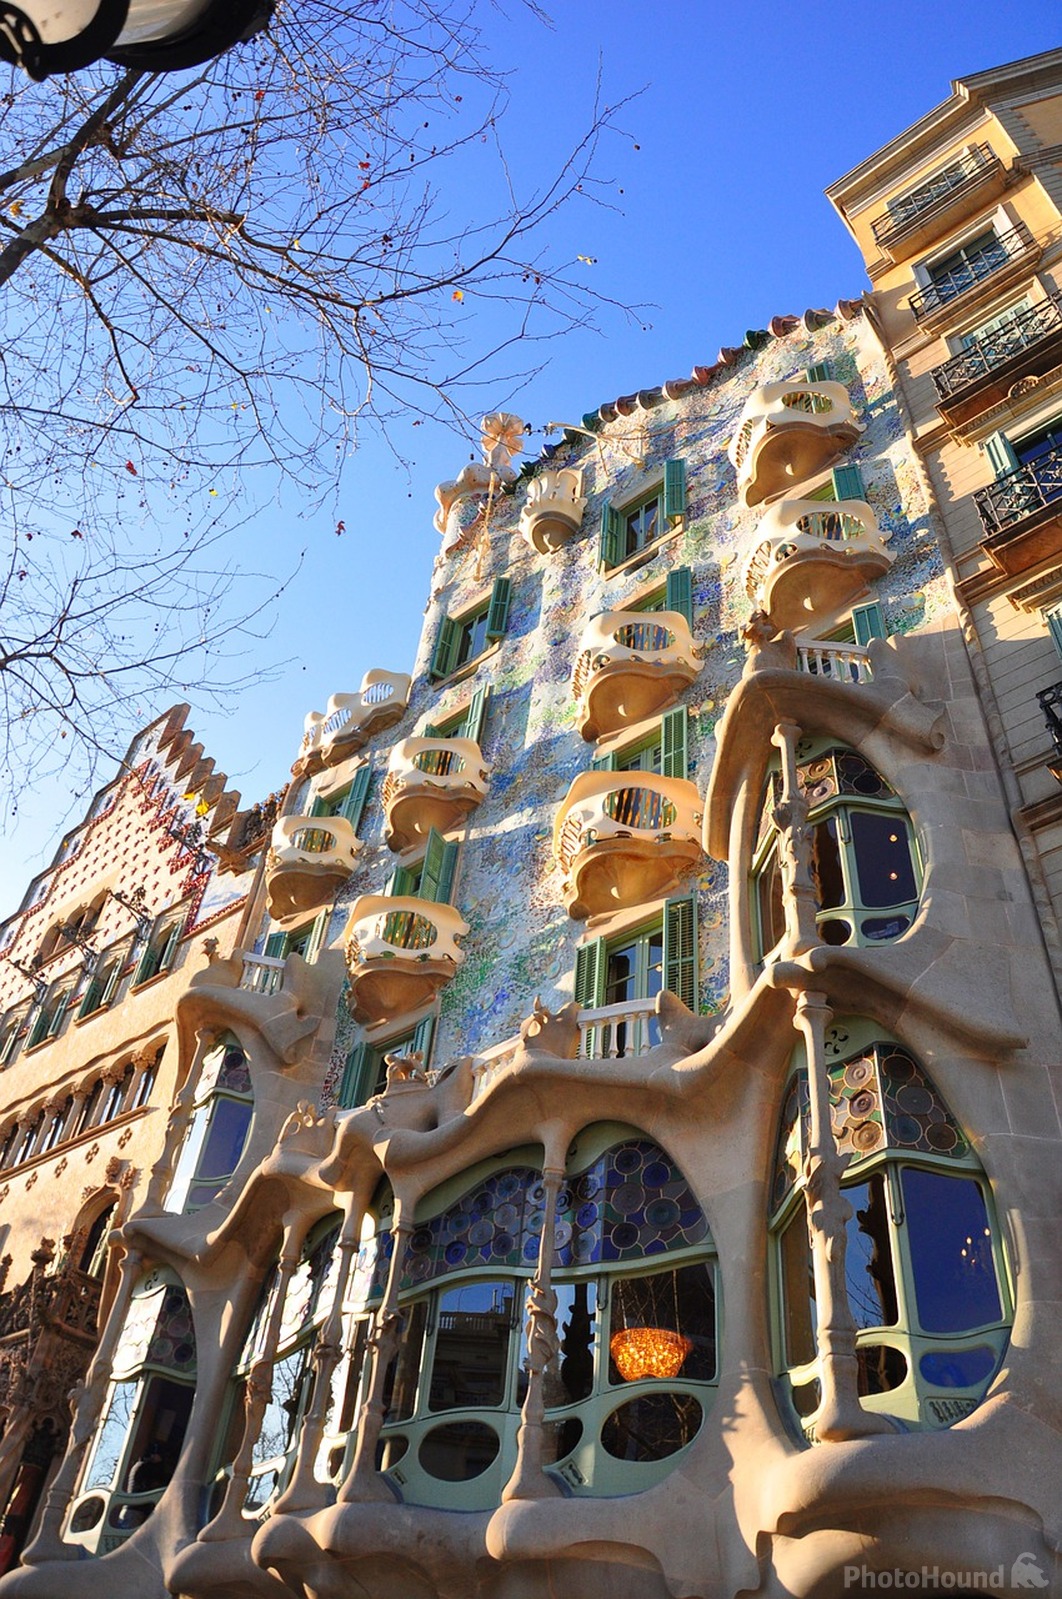 Image of Casa Batlló - Exterior by Team PhotoHound